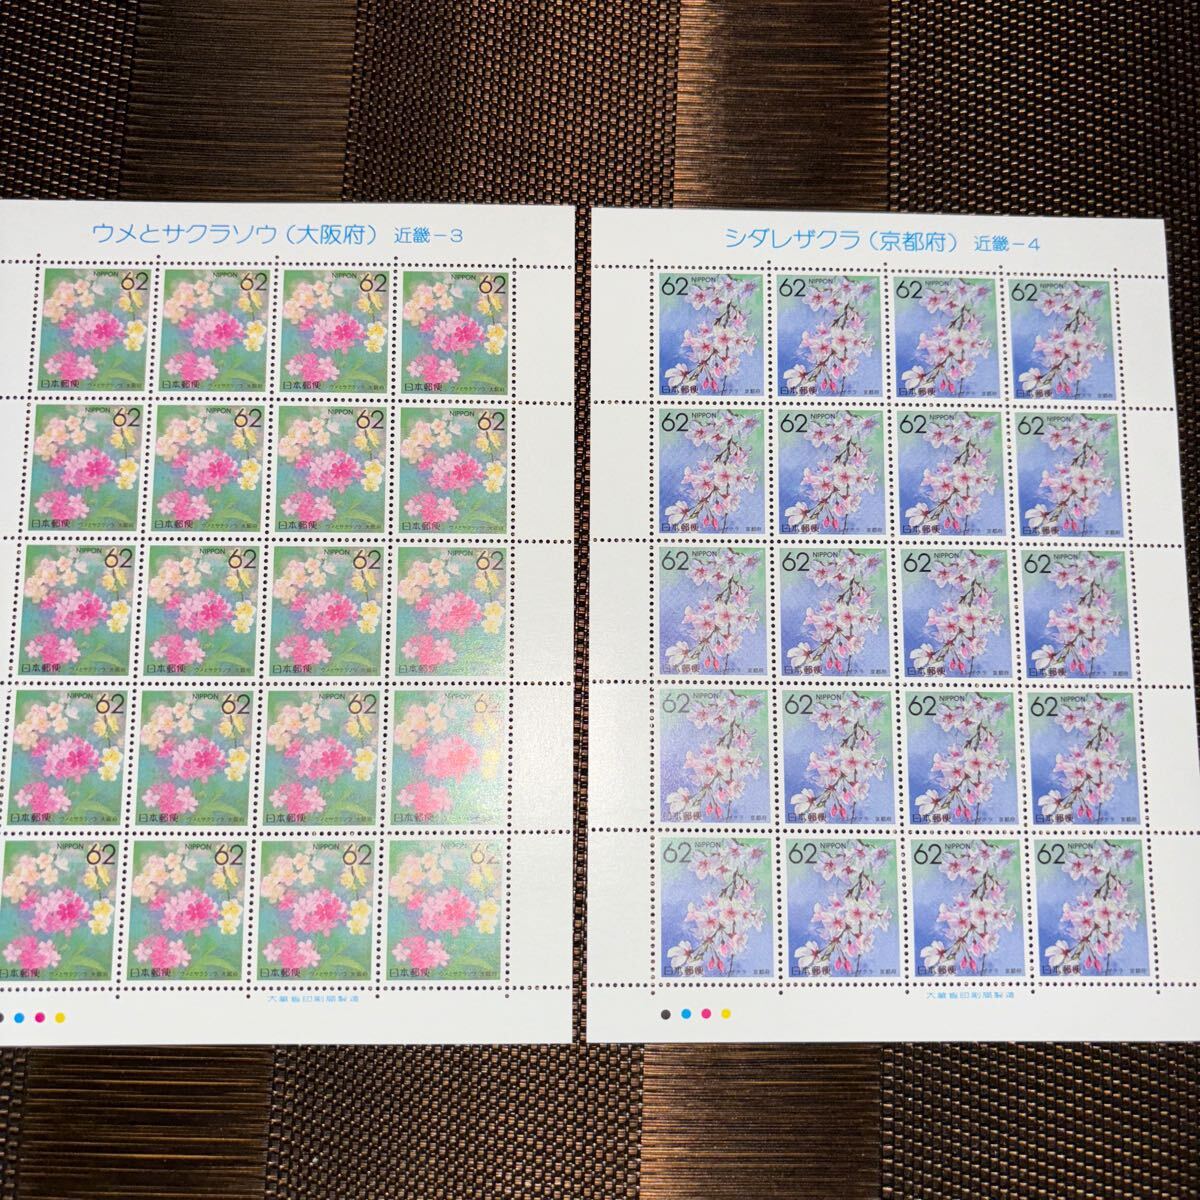 051304) Furusato Stamp Kinki 1~13 62 jpy stamp 12 seat 41 jpy stamp 1 seat sum total surface 15700 jpy 